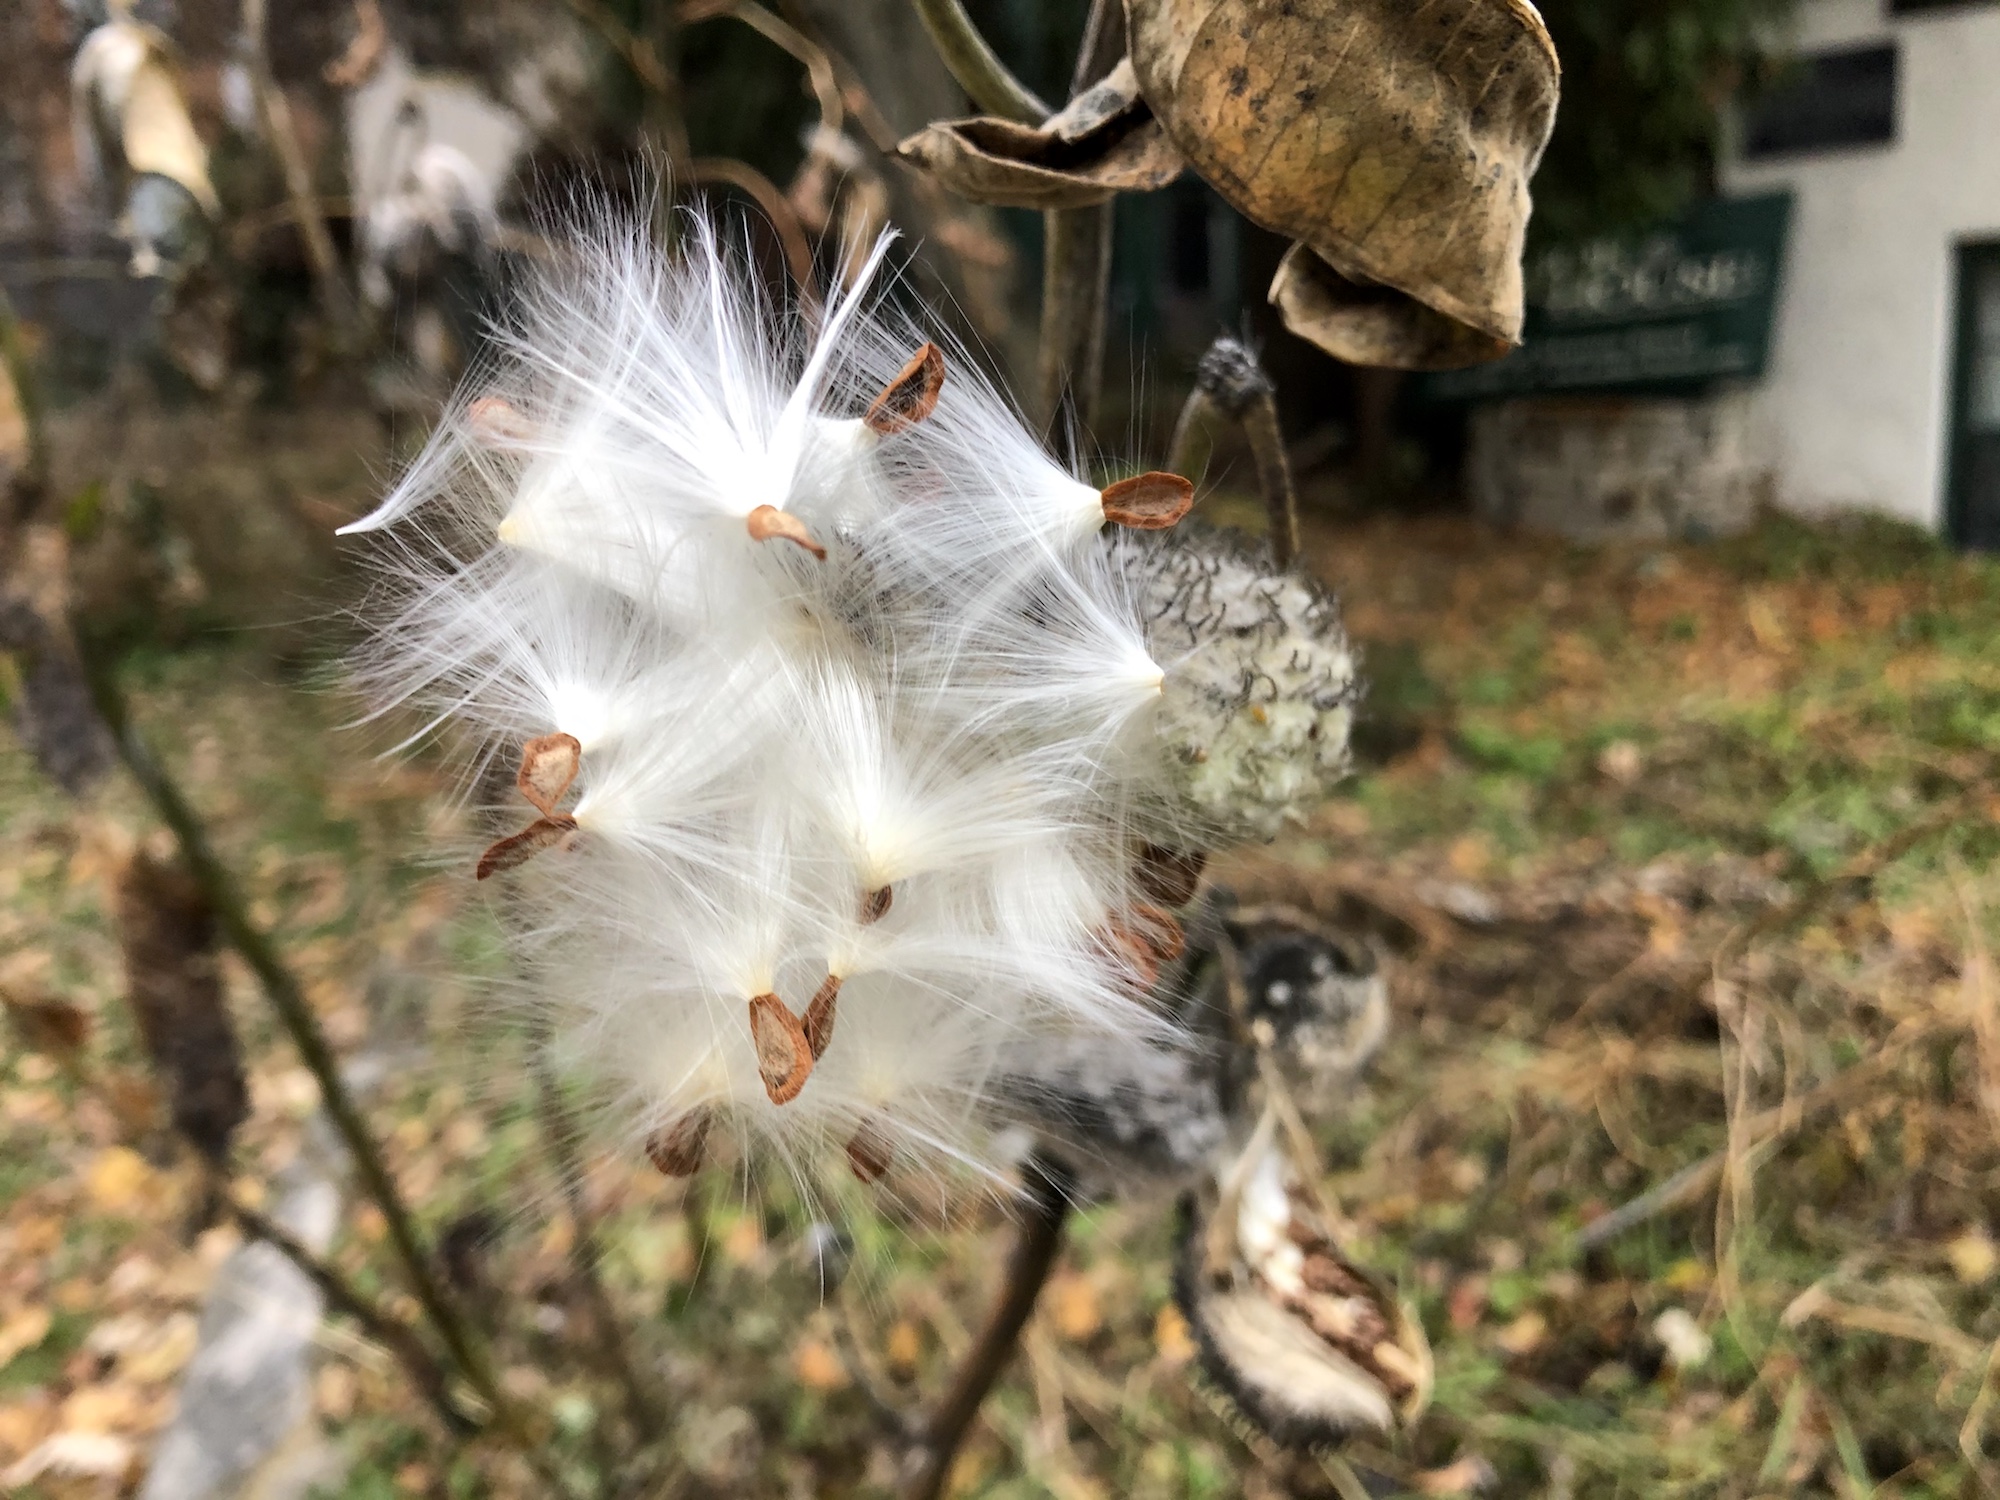 Common Milkweed by Arbor House on November 10, 2019.